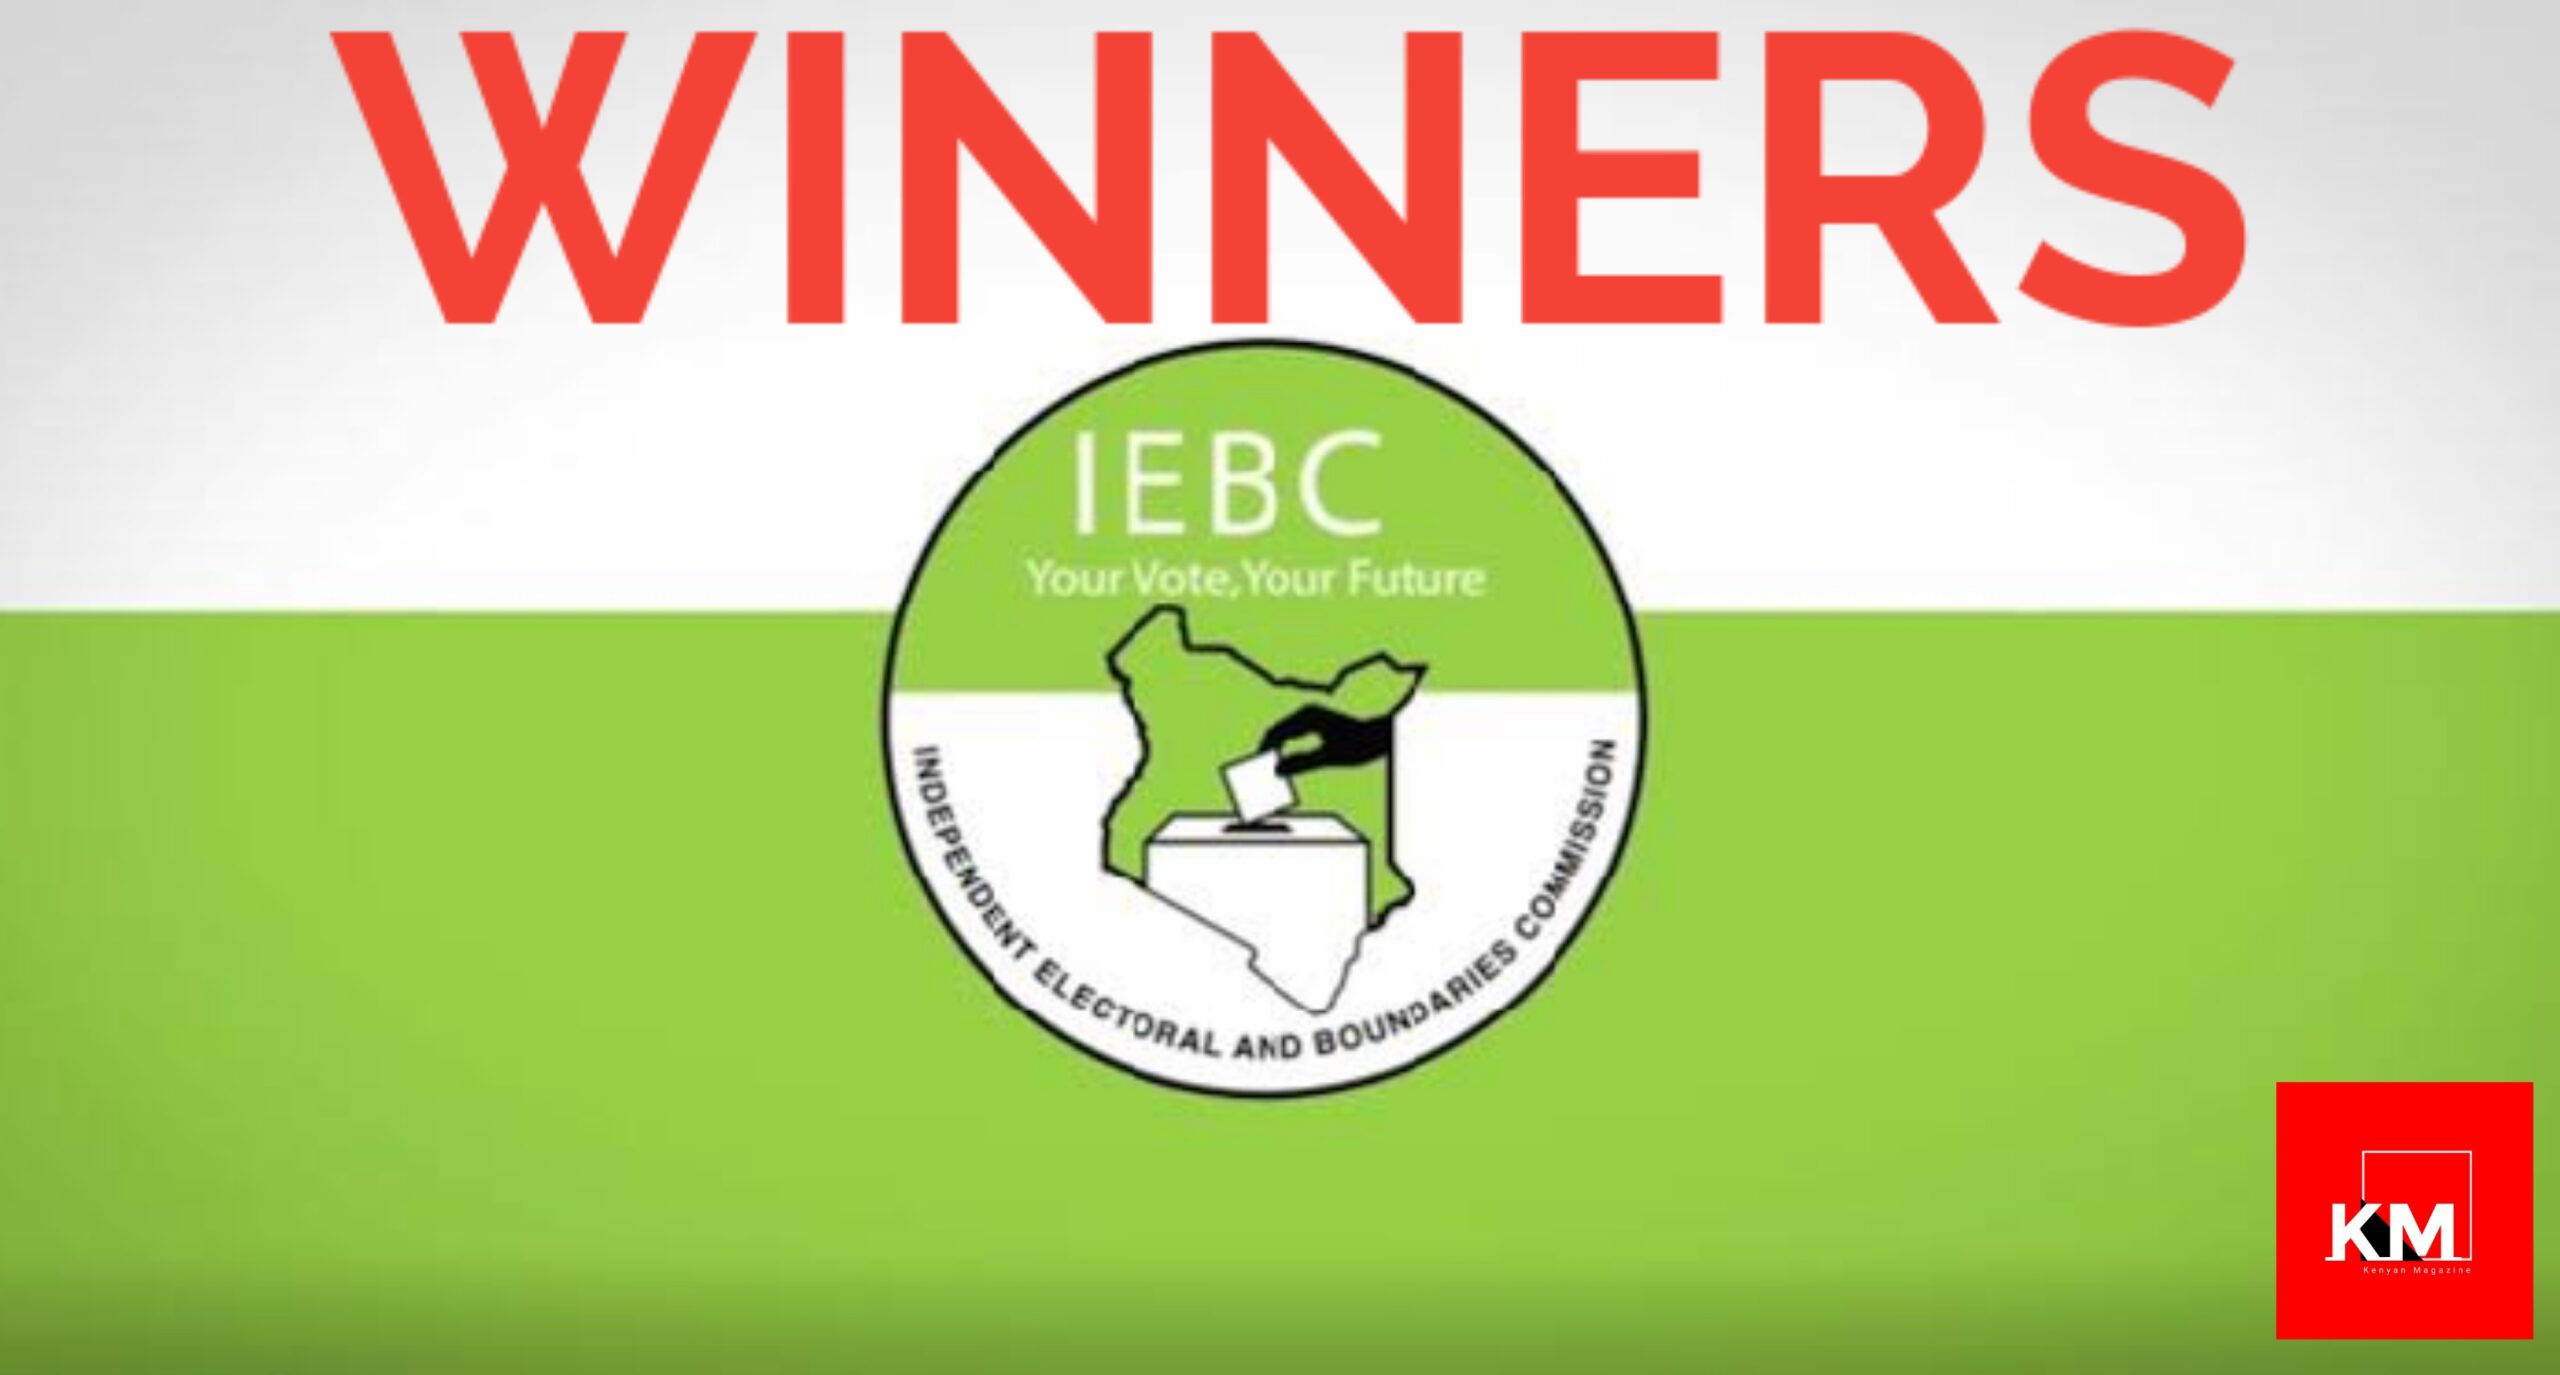 IEBC MP winners Kenya General Election